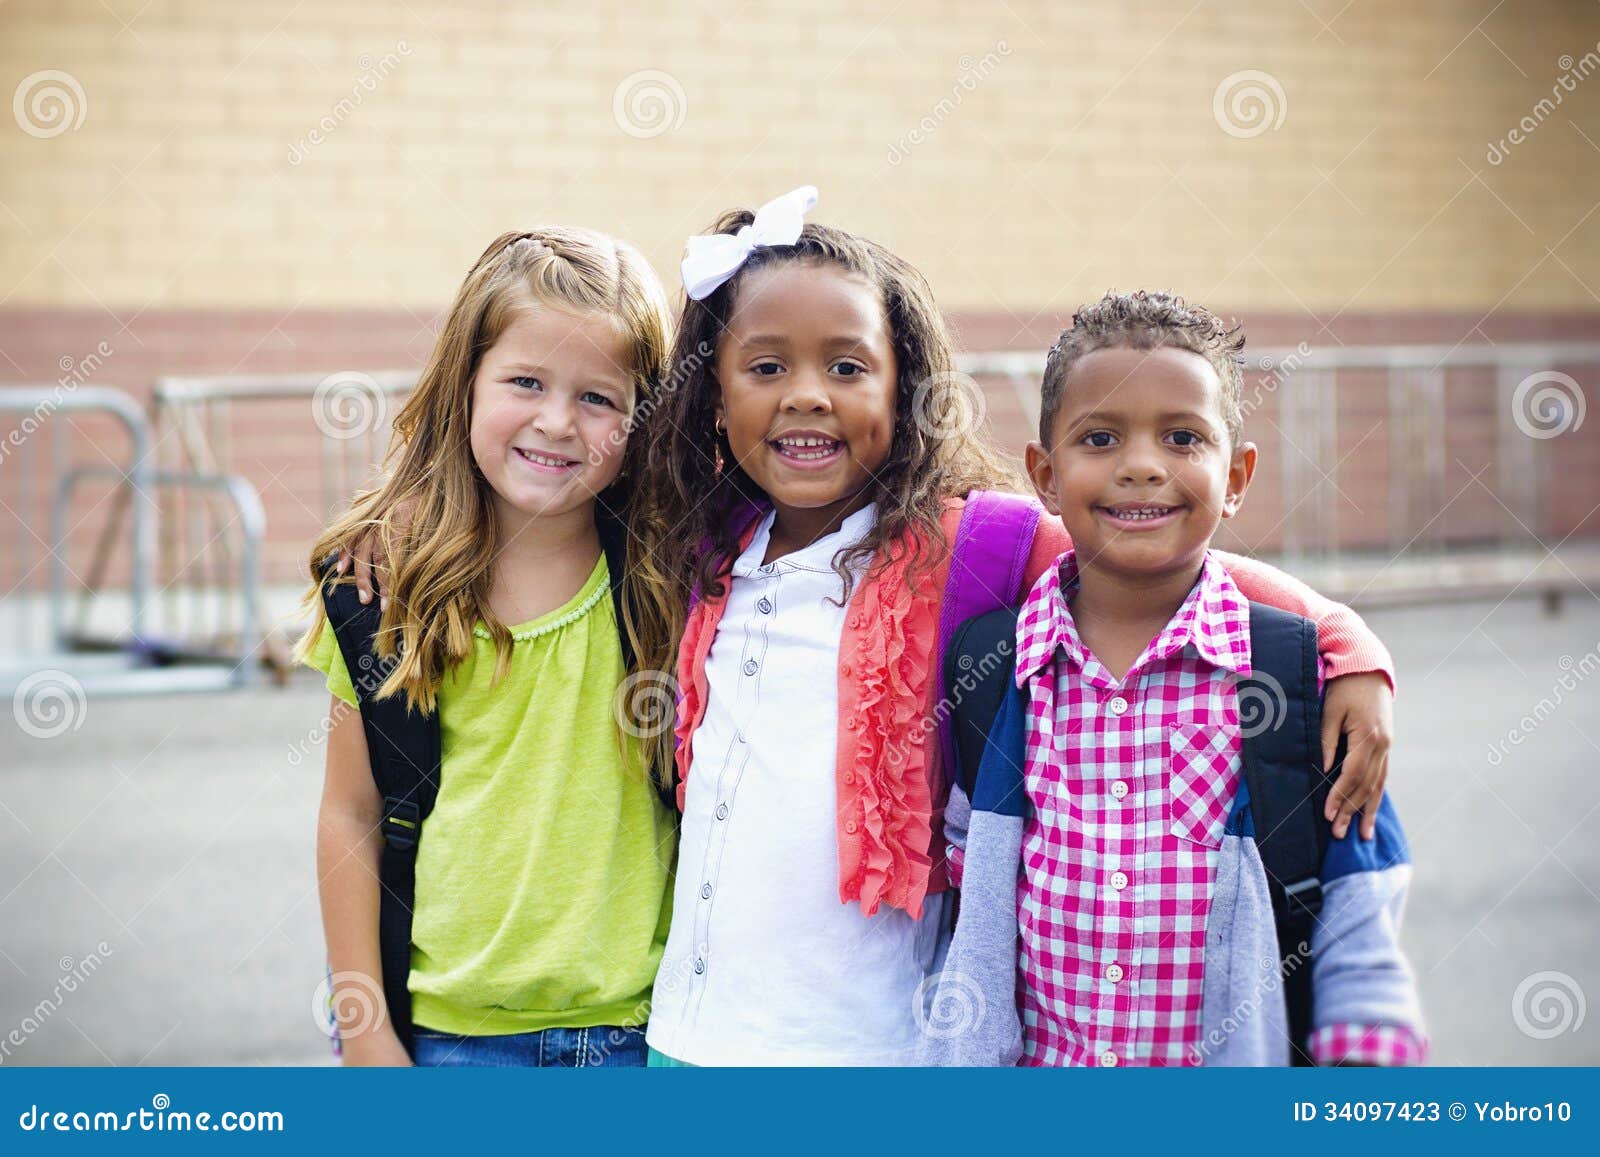 diverse children going to ary school